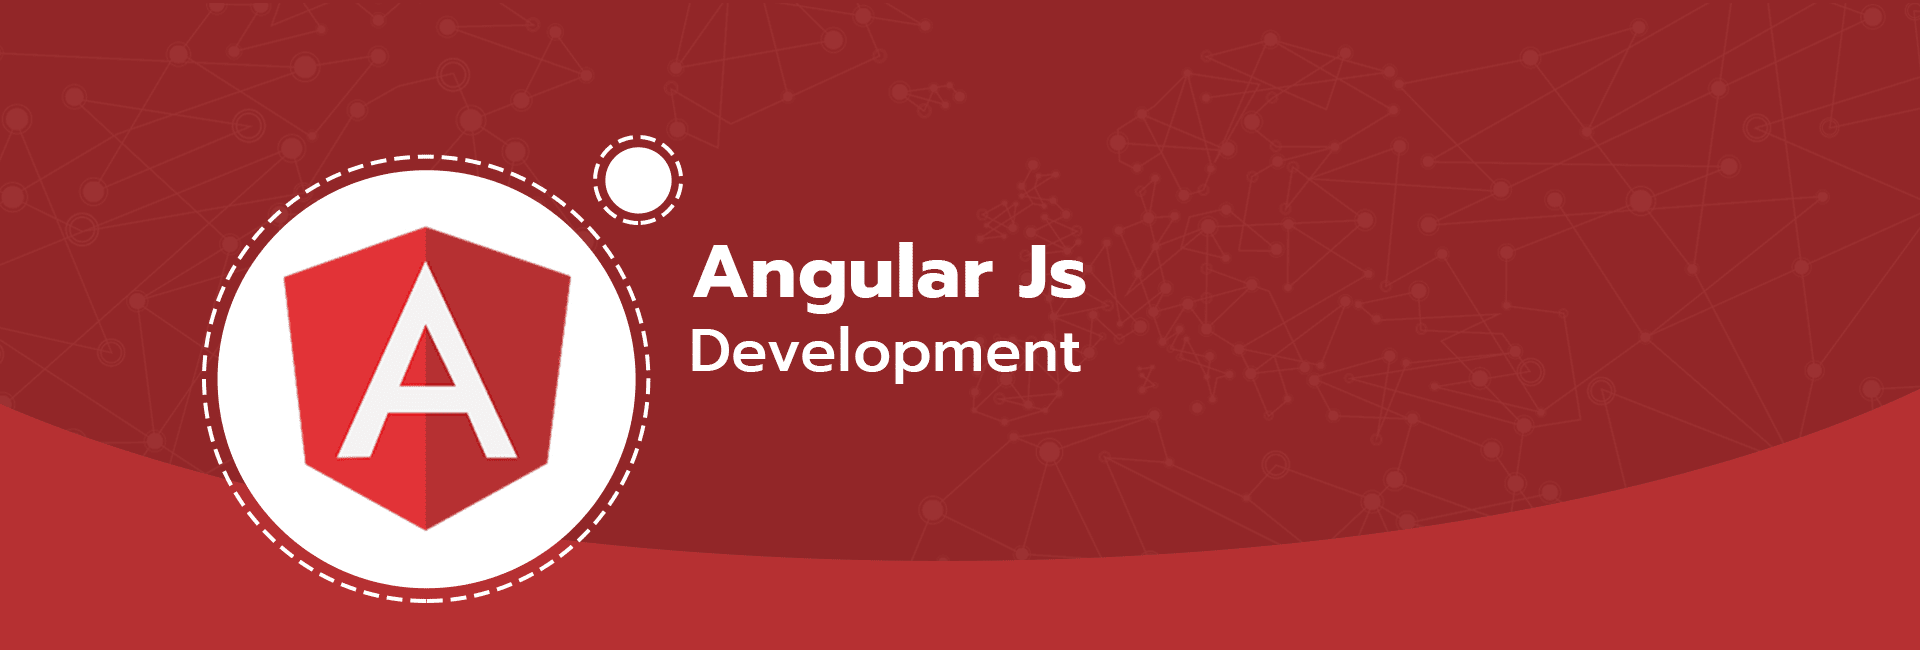 Angular JS Development Companies